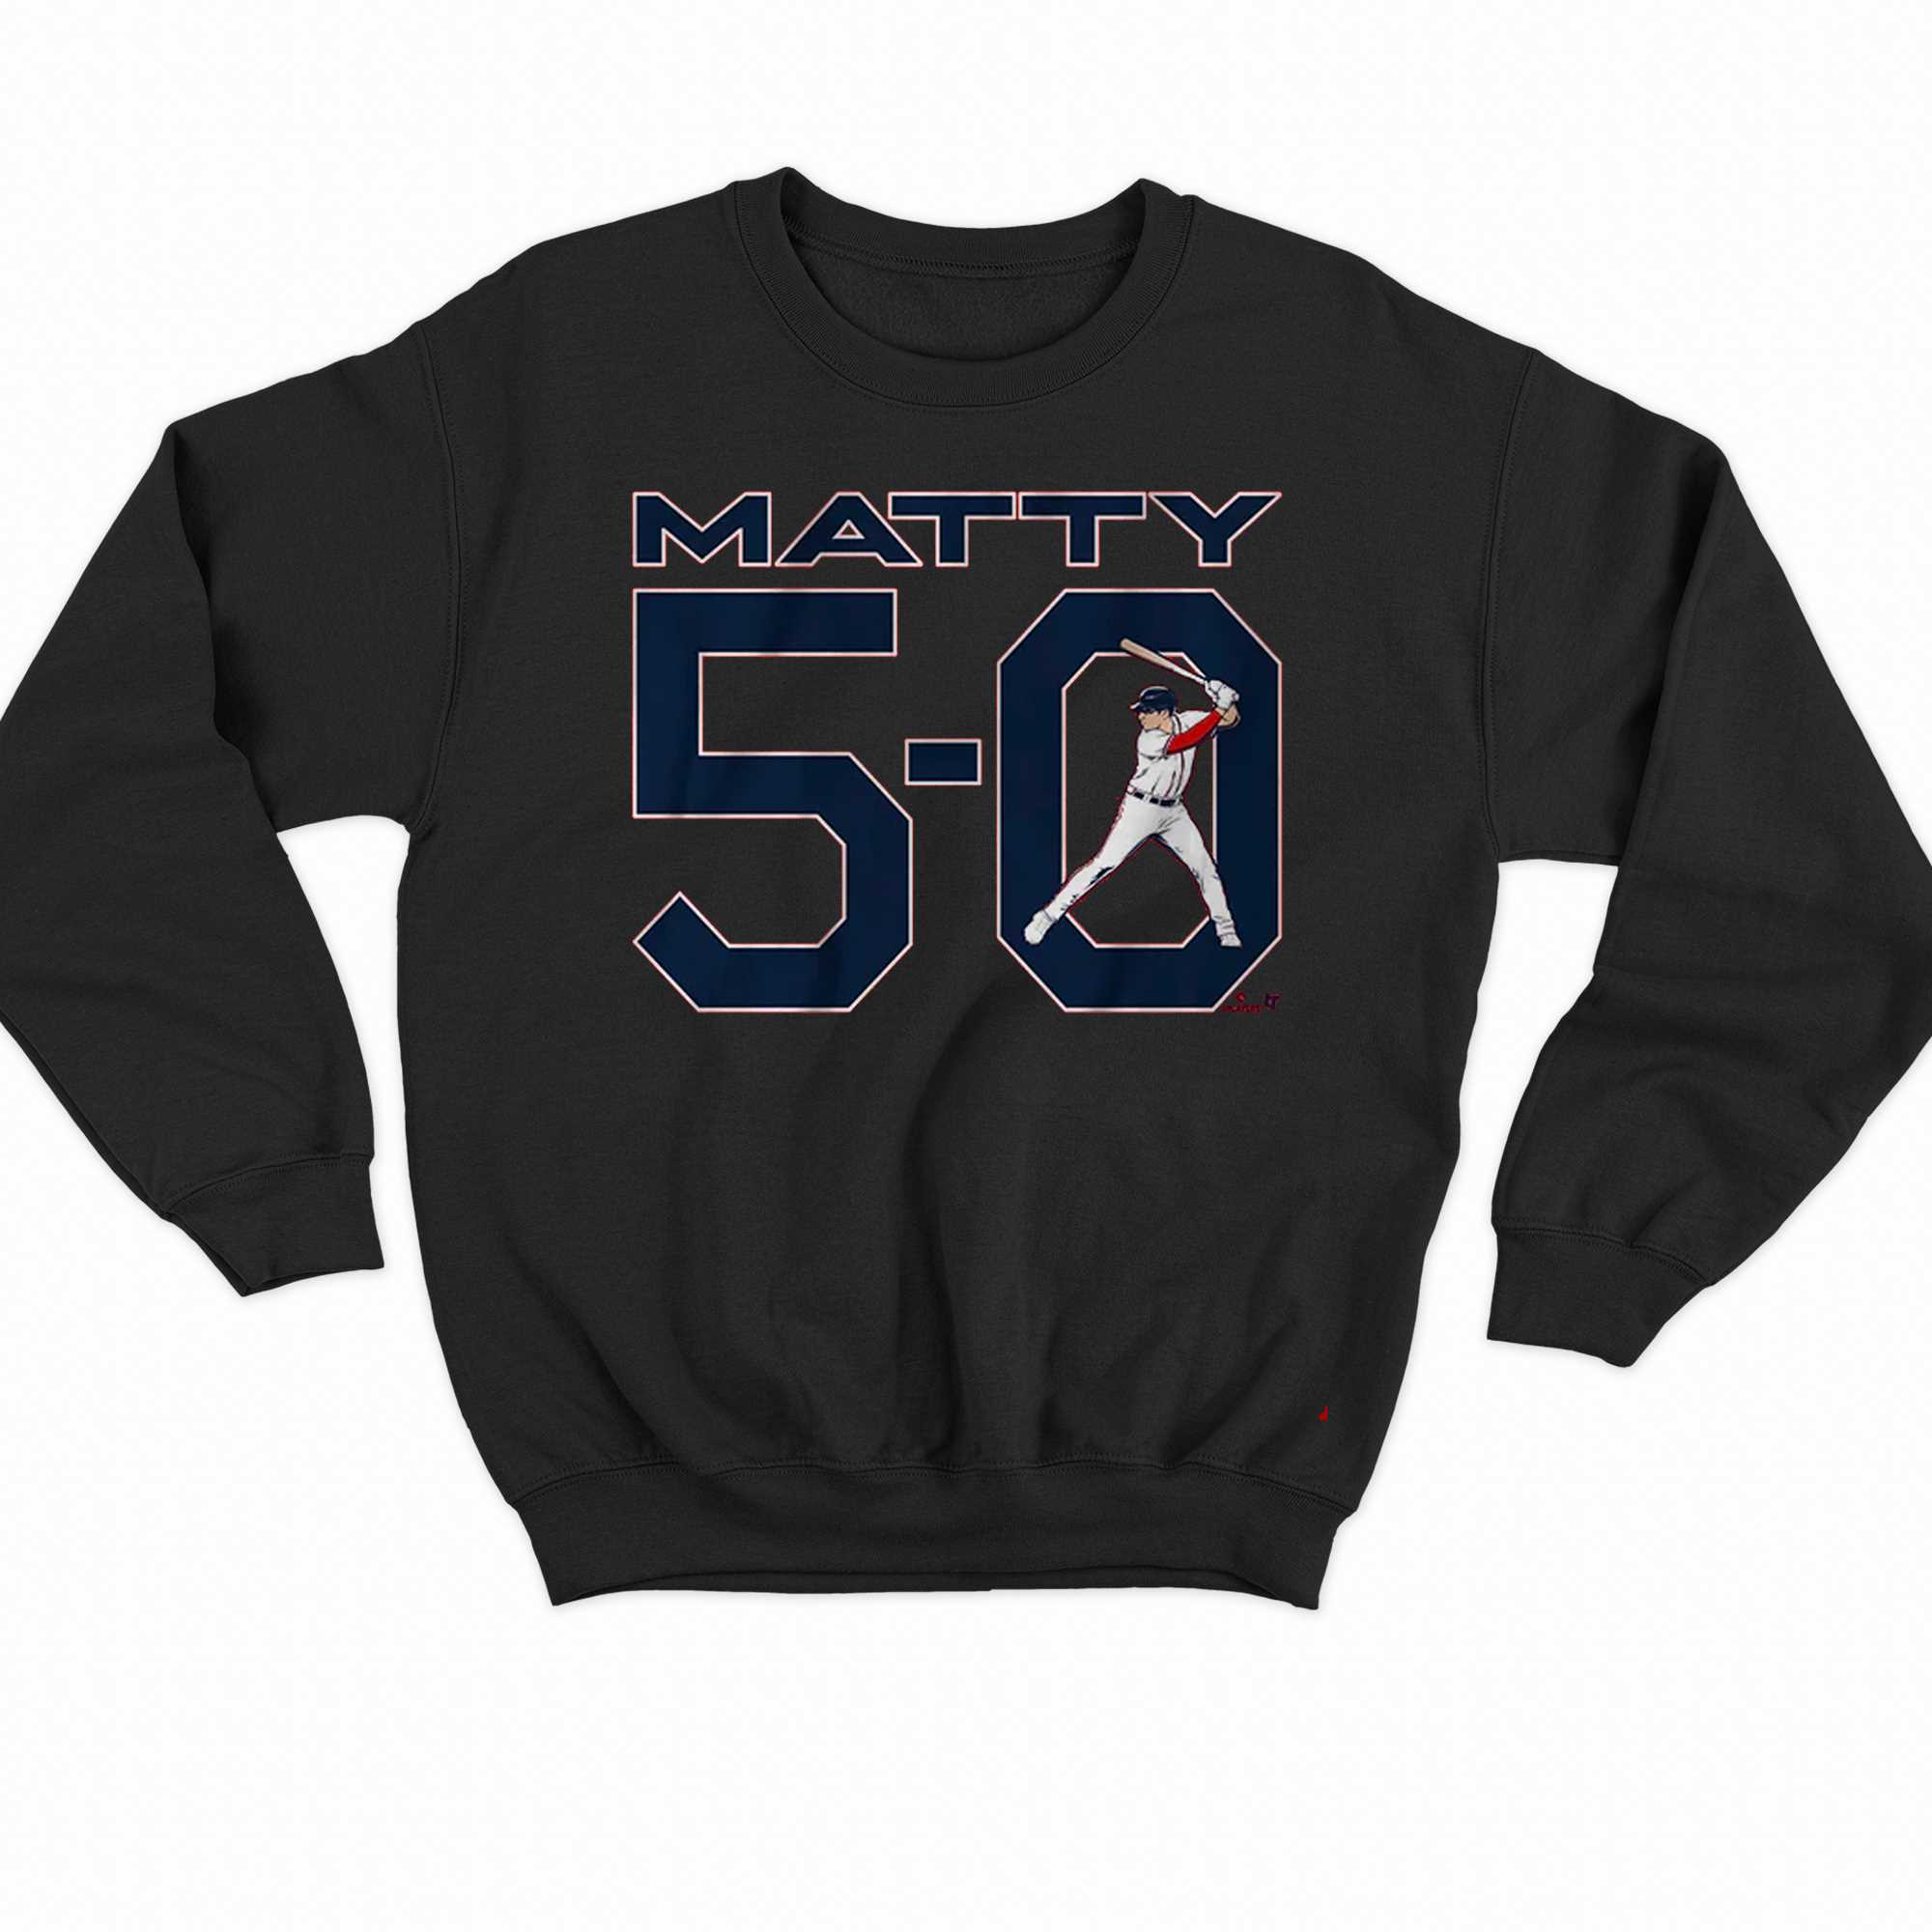 Matt Olson Matty 5-0 Shirt - Shibtee Clothing